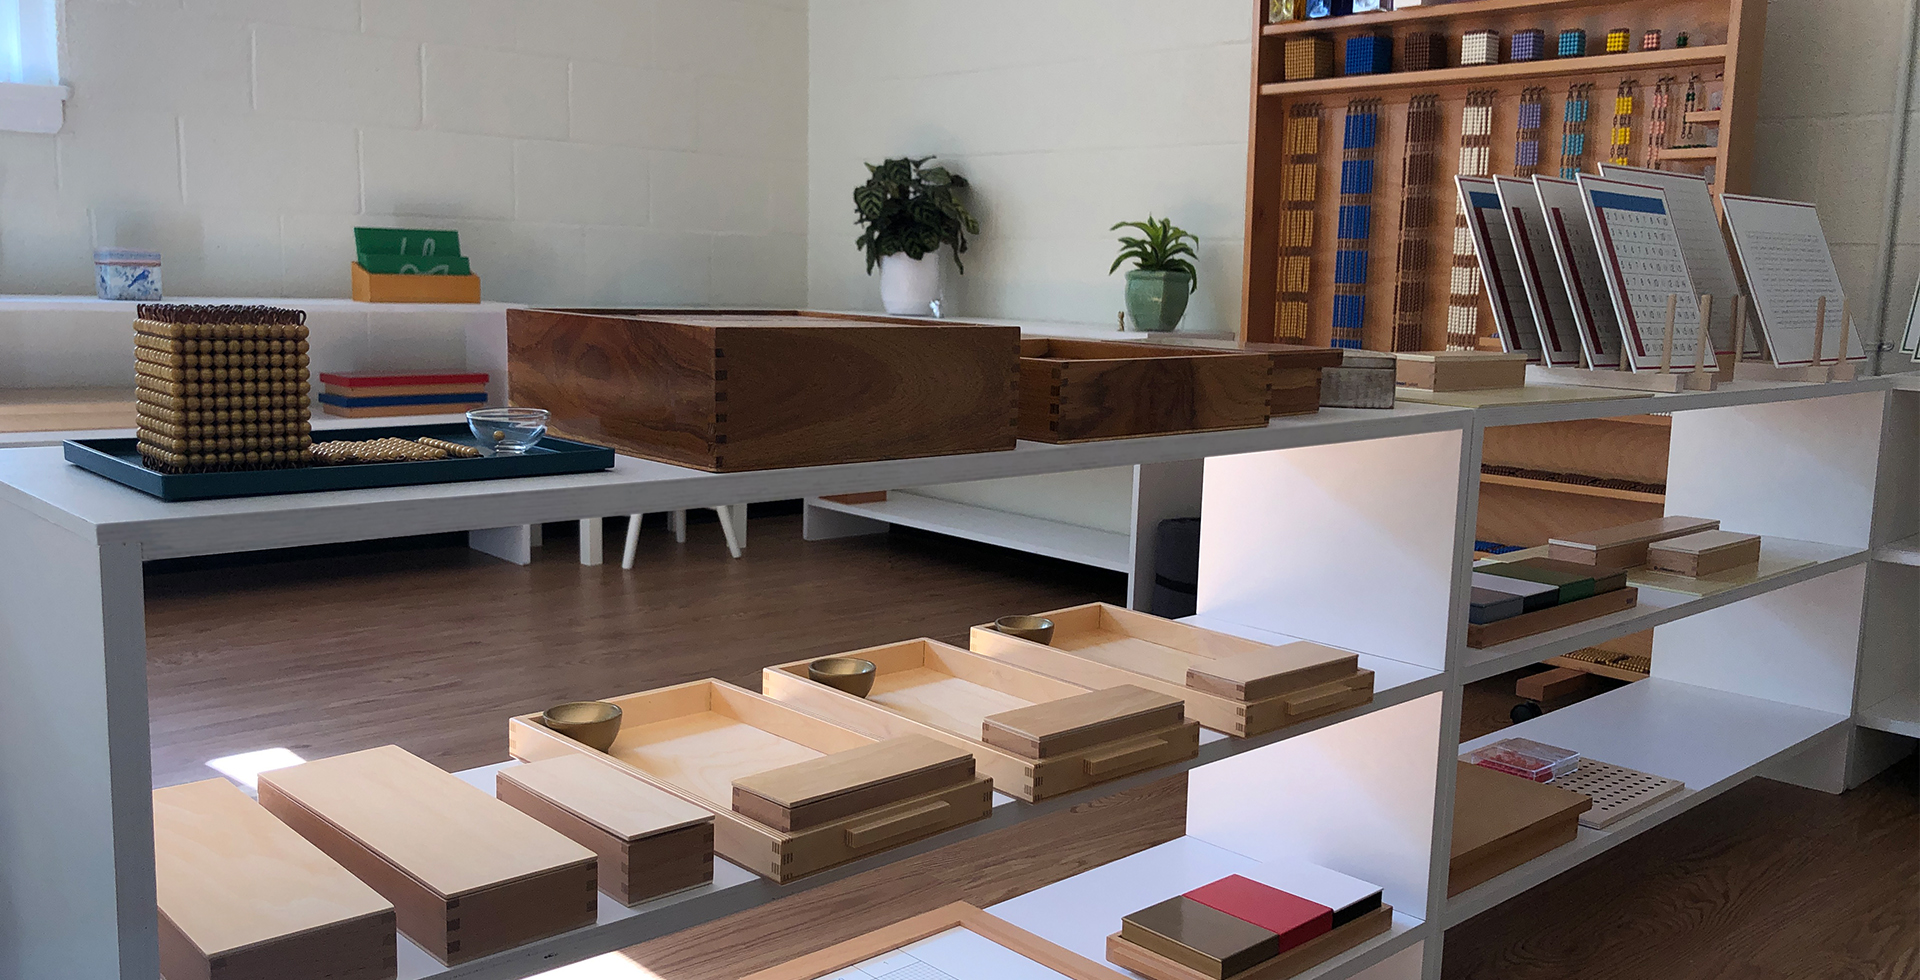 Biesse America and Cefla build shelves at Montessori school in Charlotte, NC